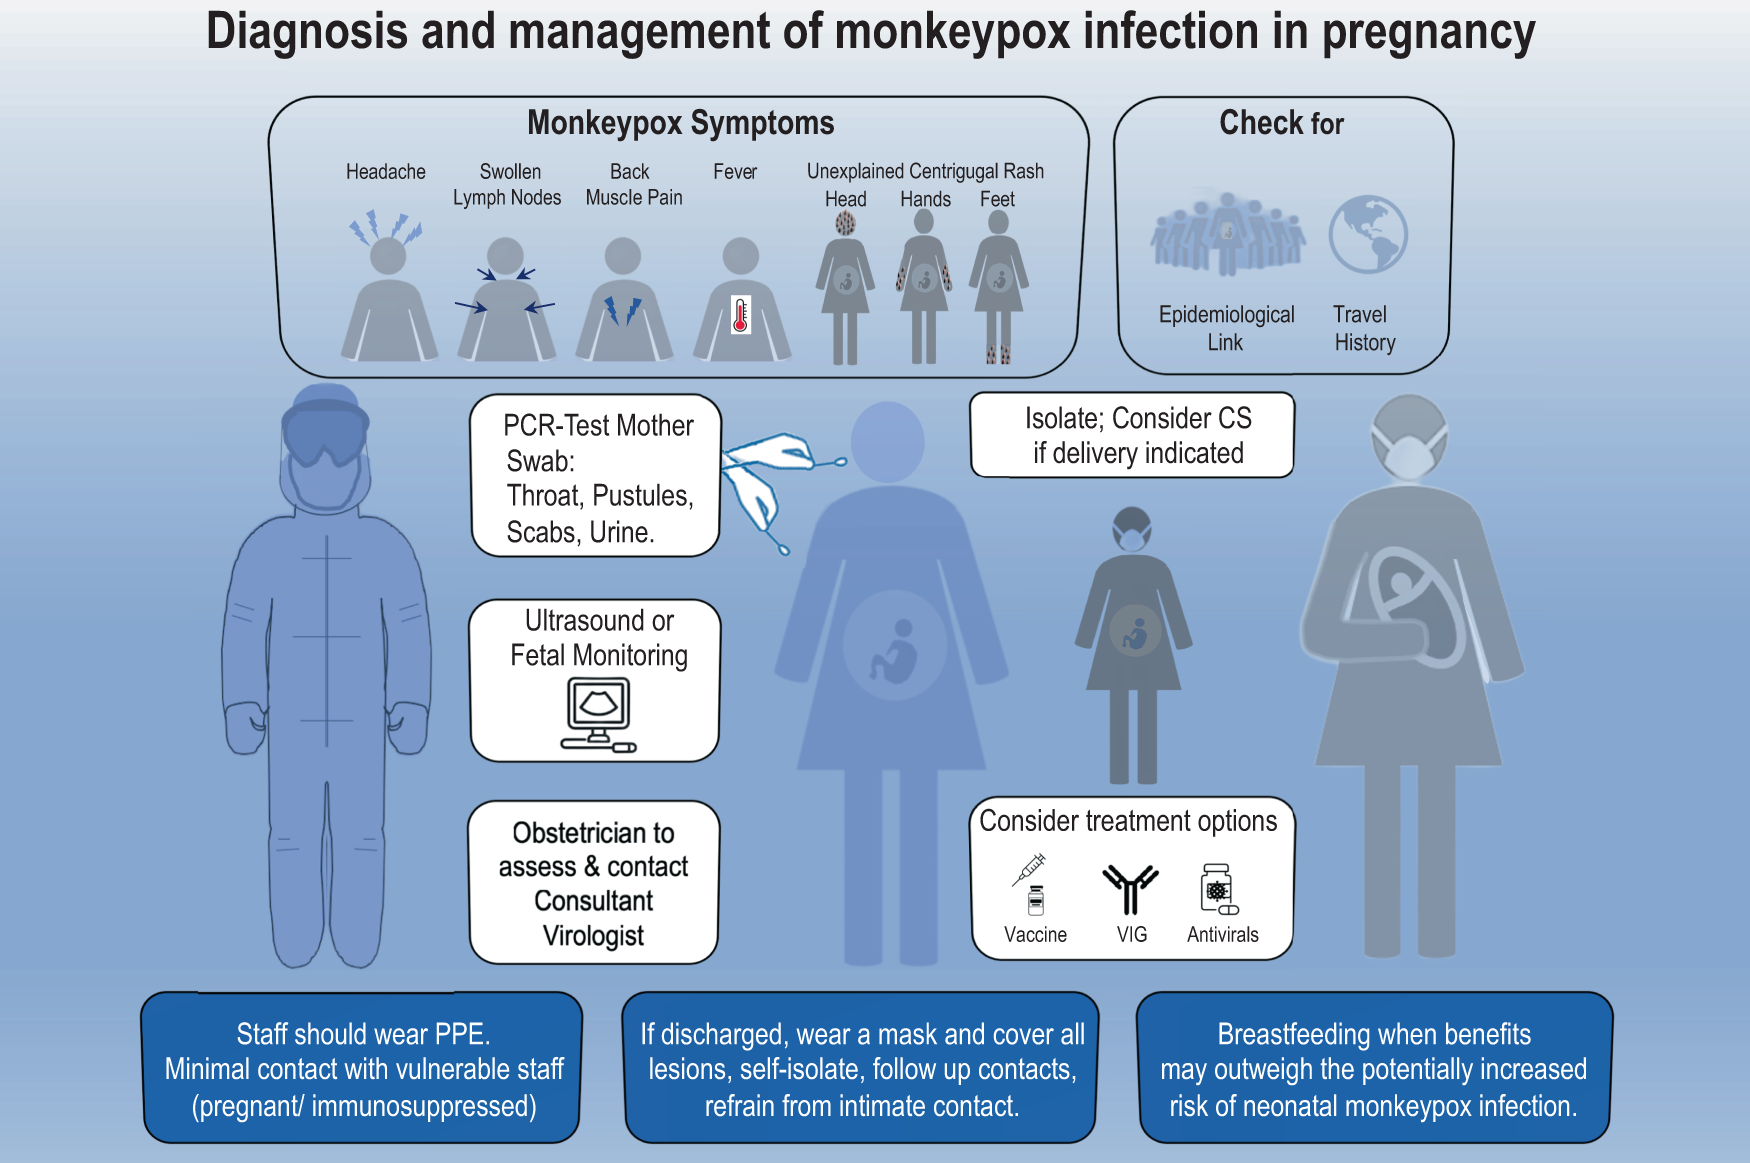 Monkey shortage imperils early-stage drug development timelines